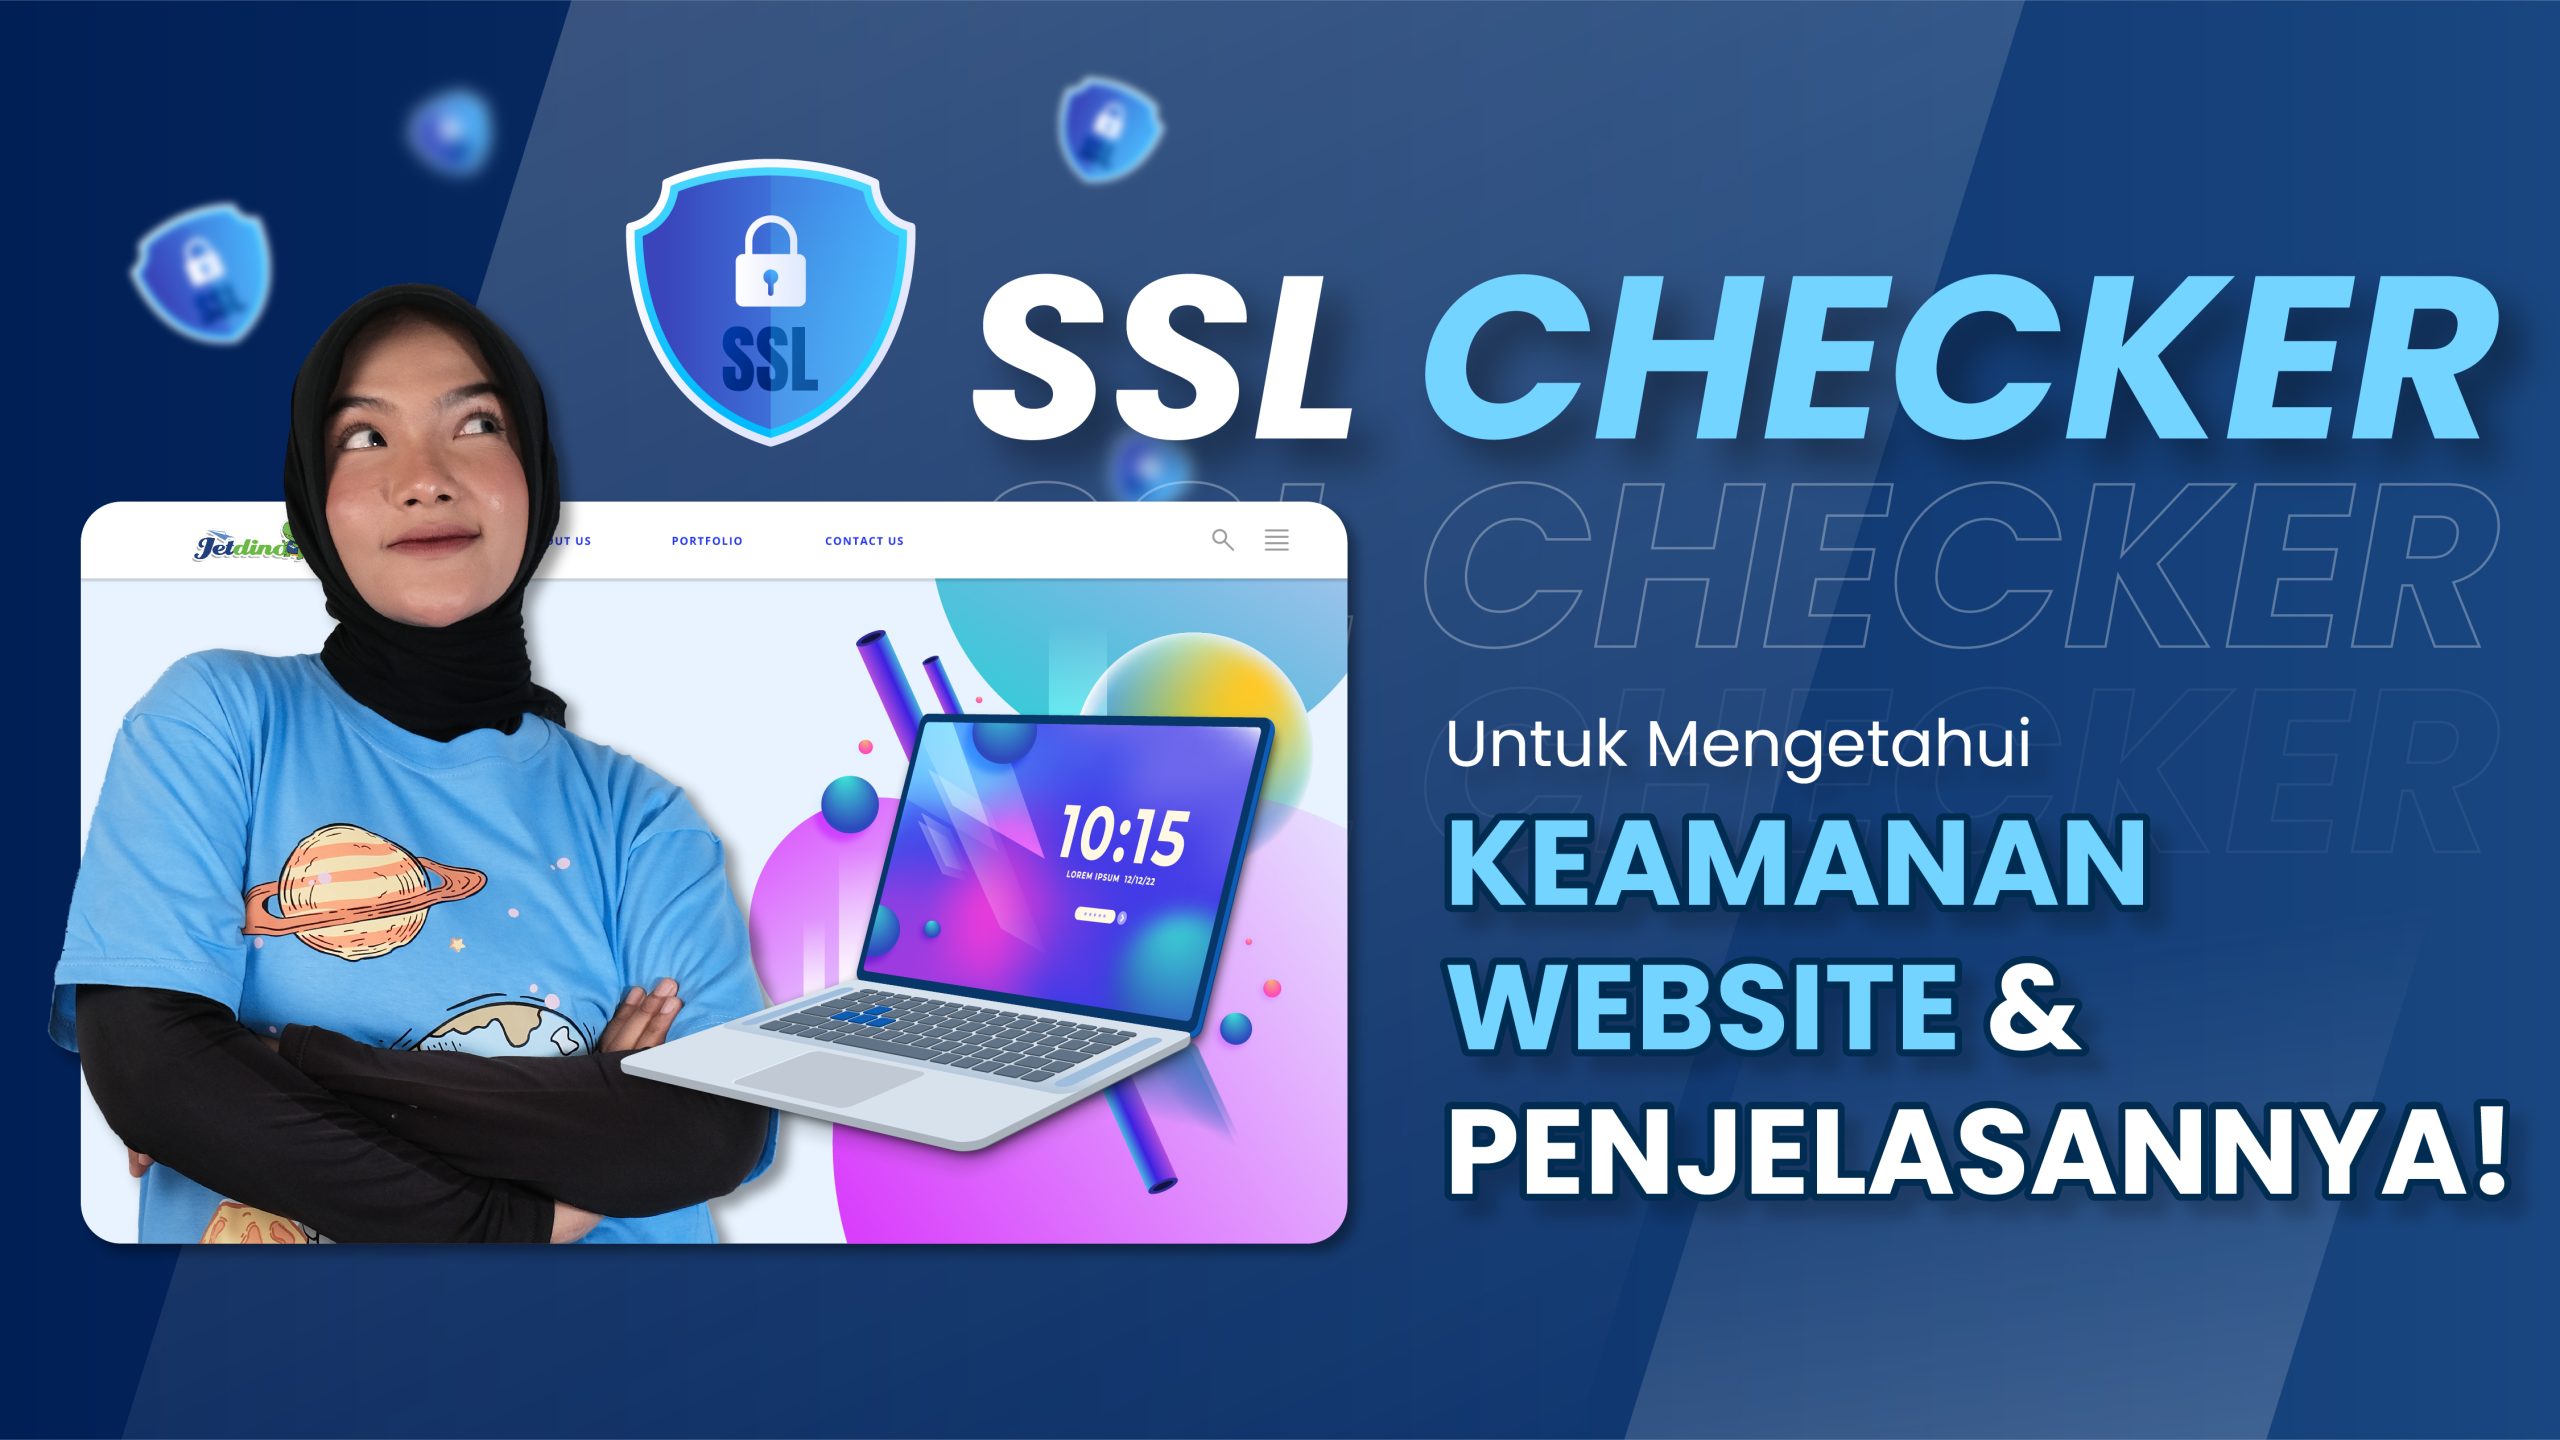 SSL Checker, Untuk Mengetahui Keamanan Website dan Penjelasannya!